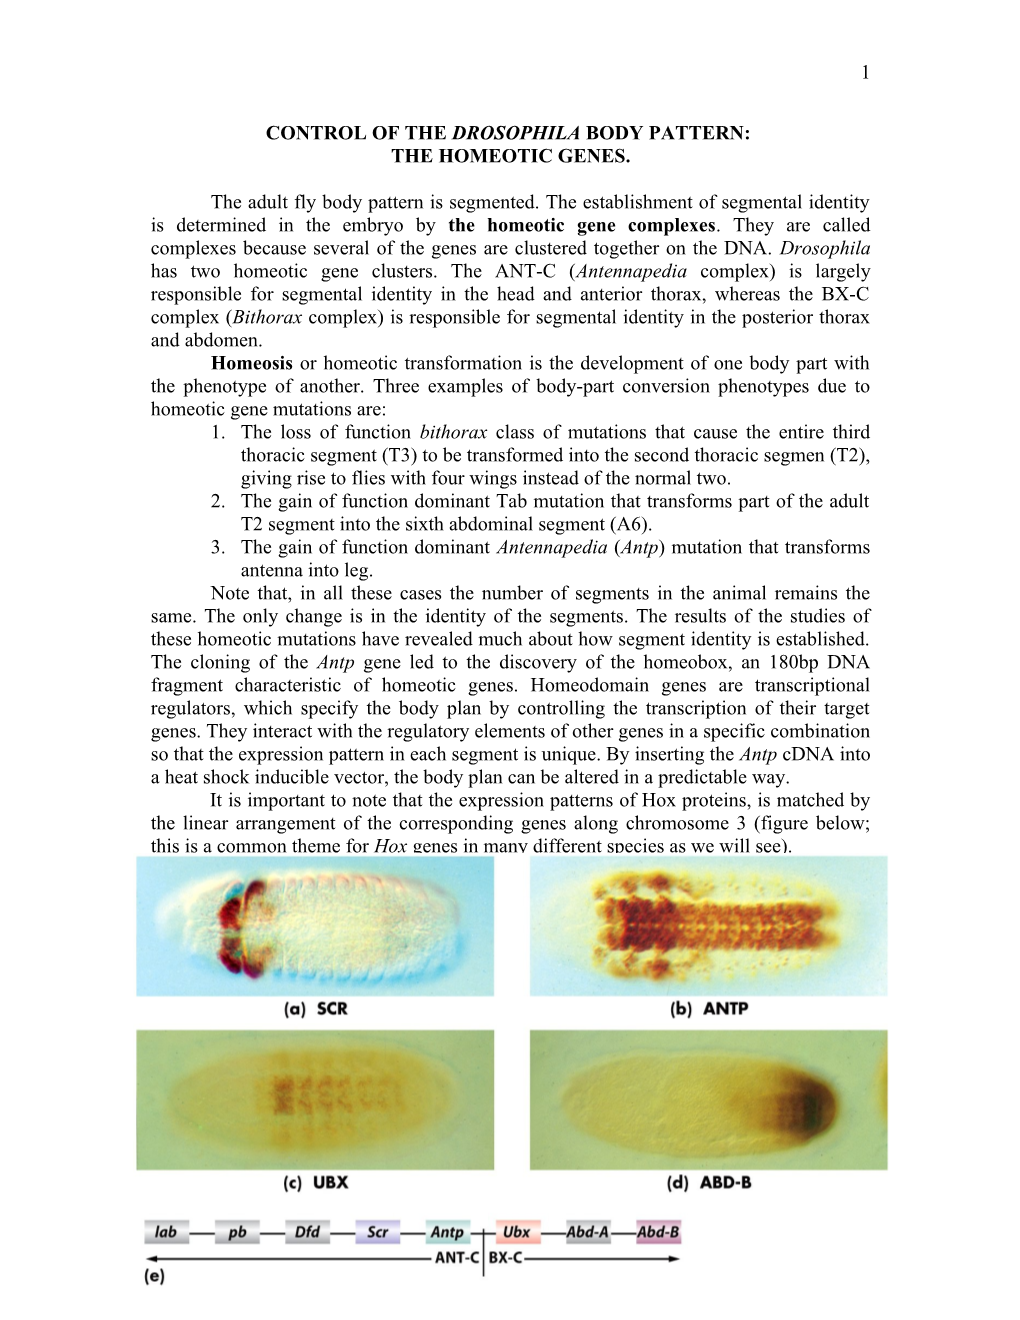 Control of the Drosophila Body Pattern